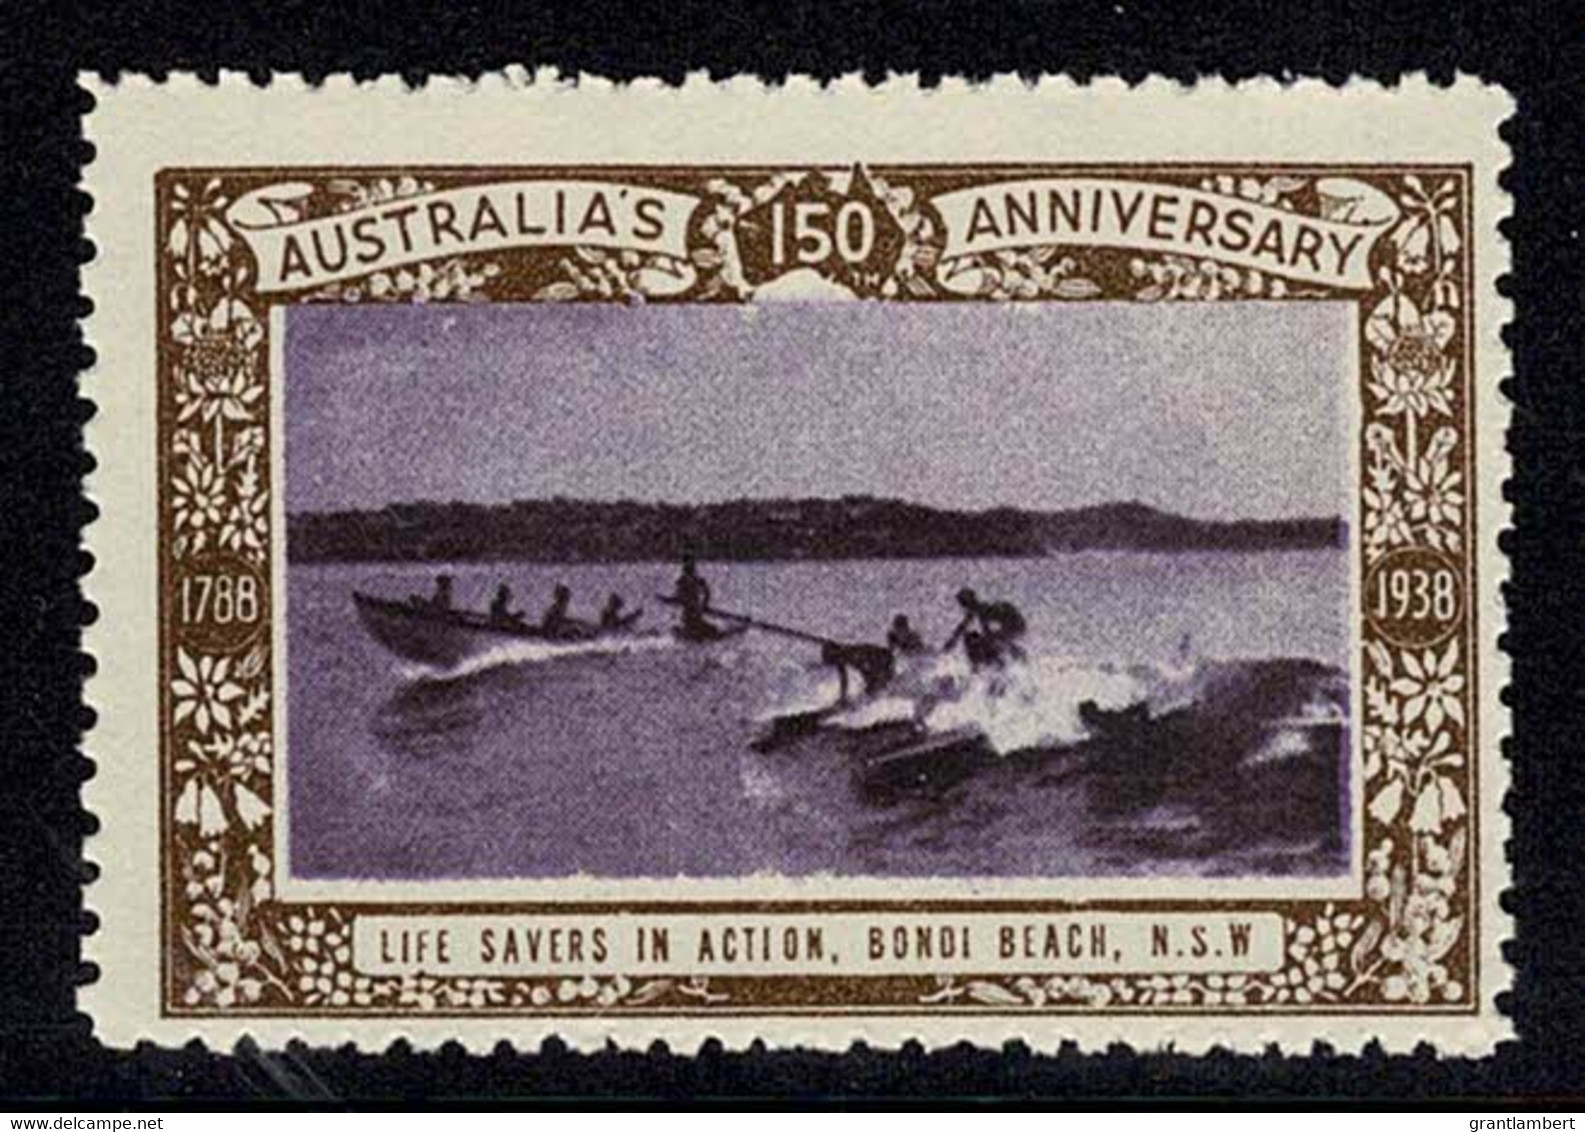 Australia 1938 Life Savers, Bondi Beach - NSW 150th Anniversary Cinderella MNH - Cinderelas